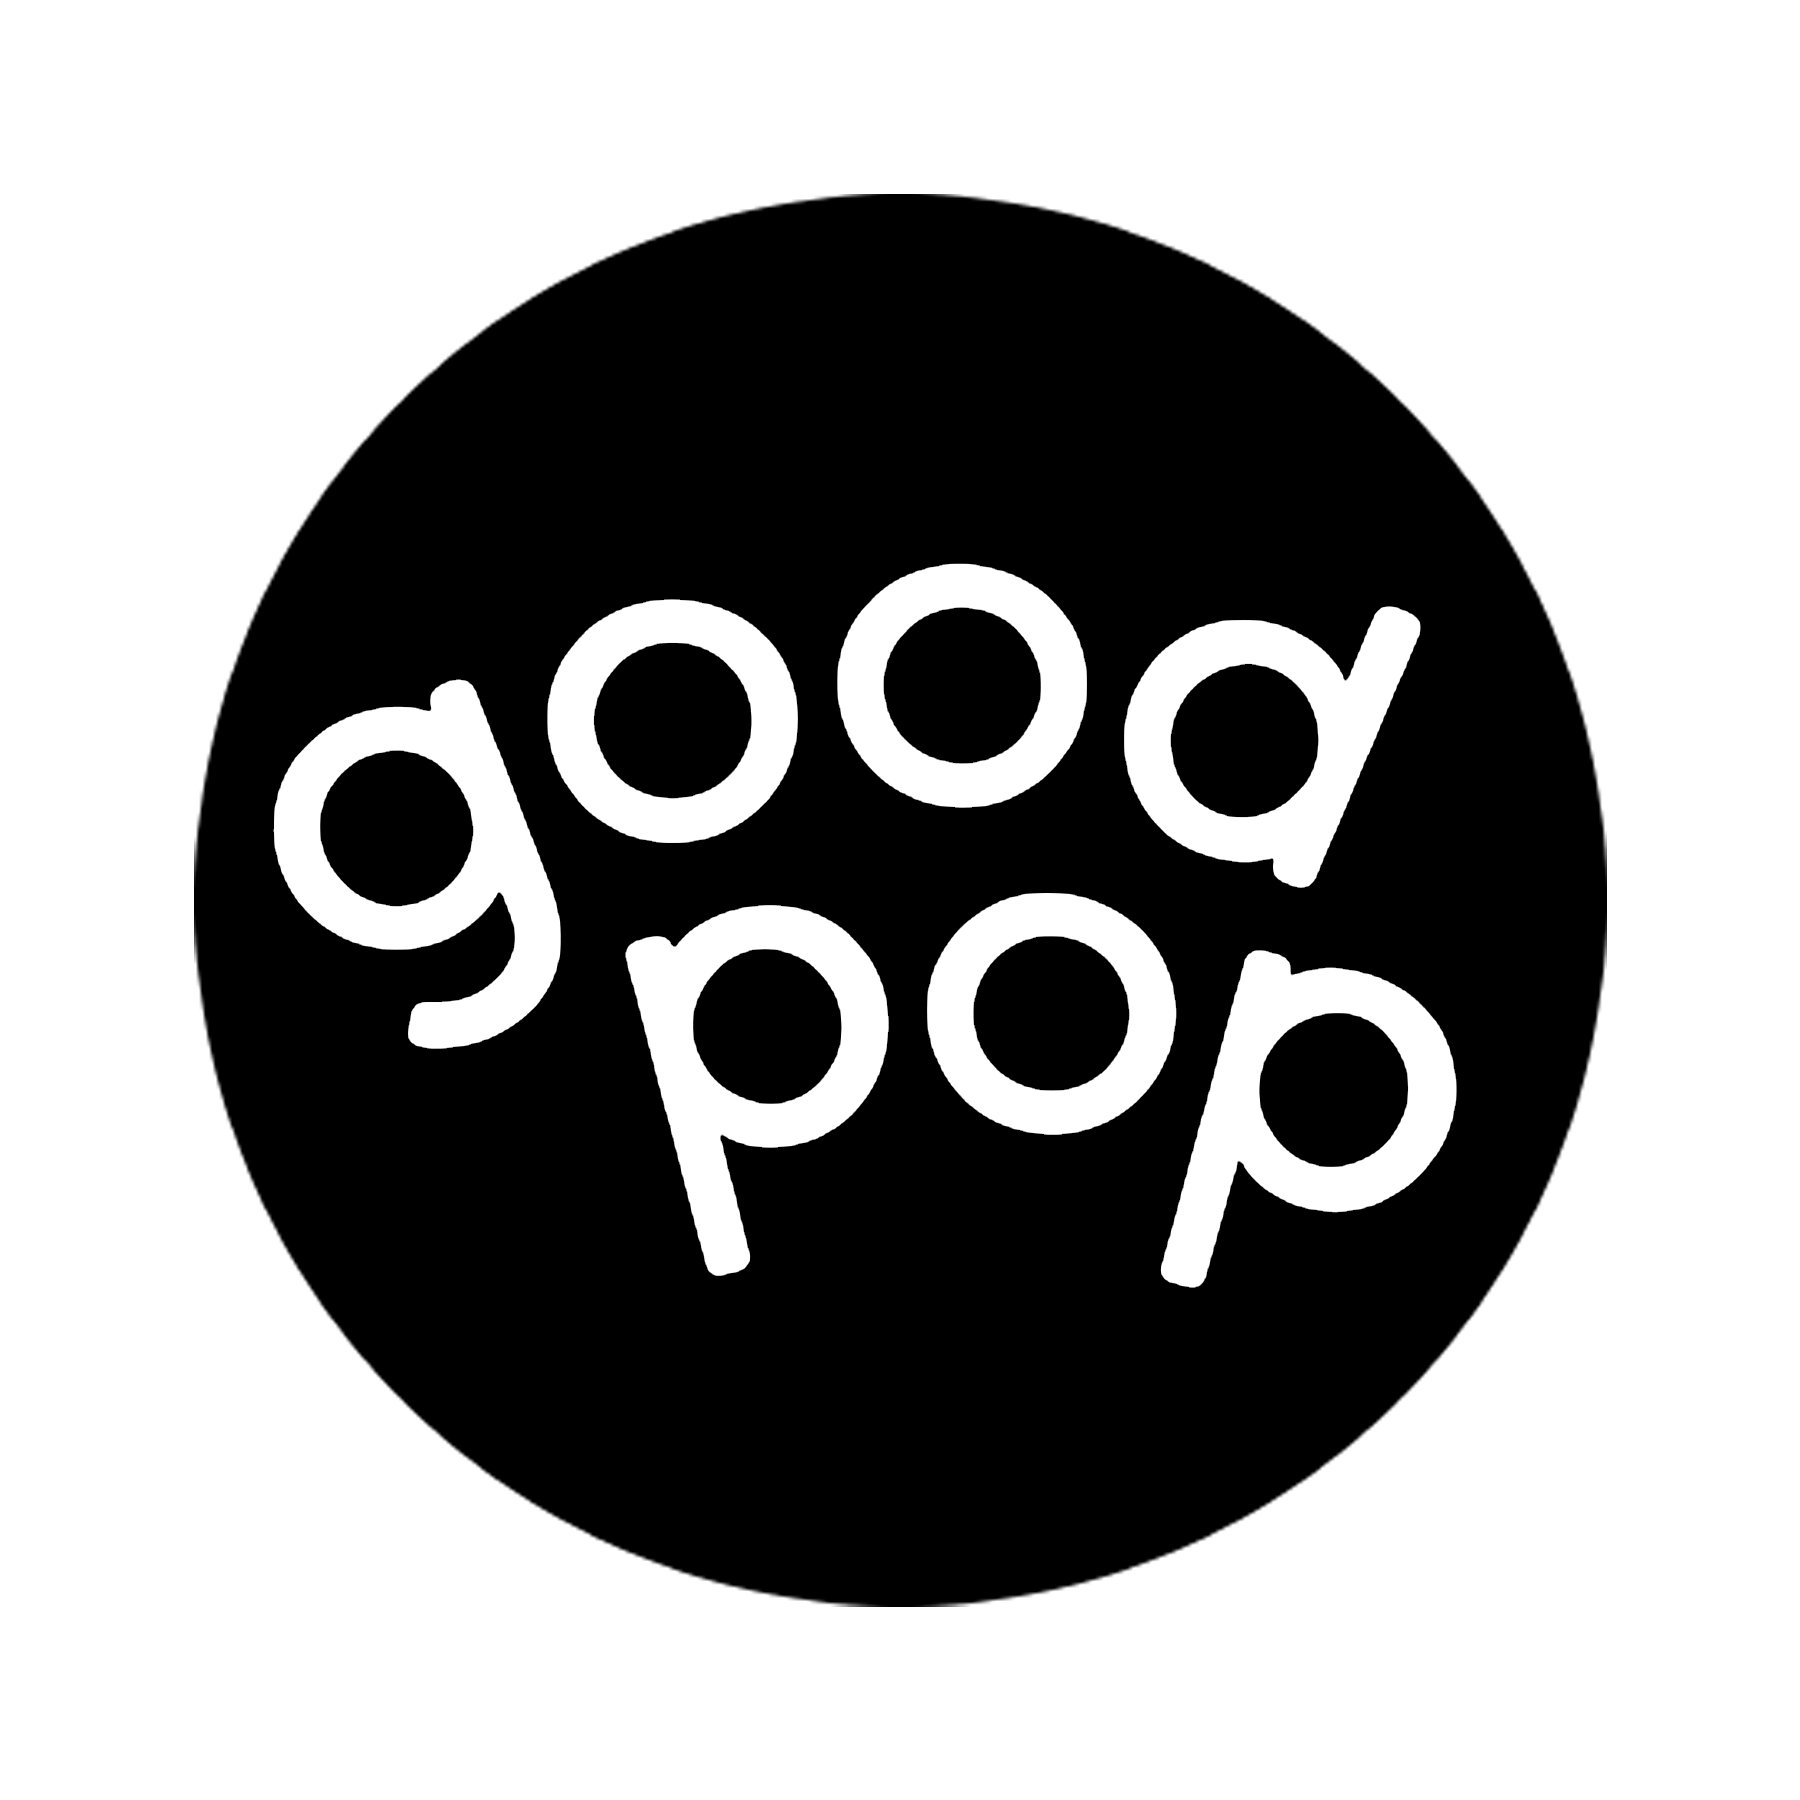 Goodpop Logo.jpg